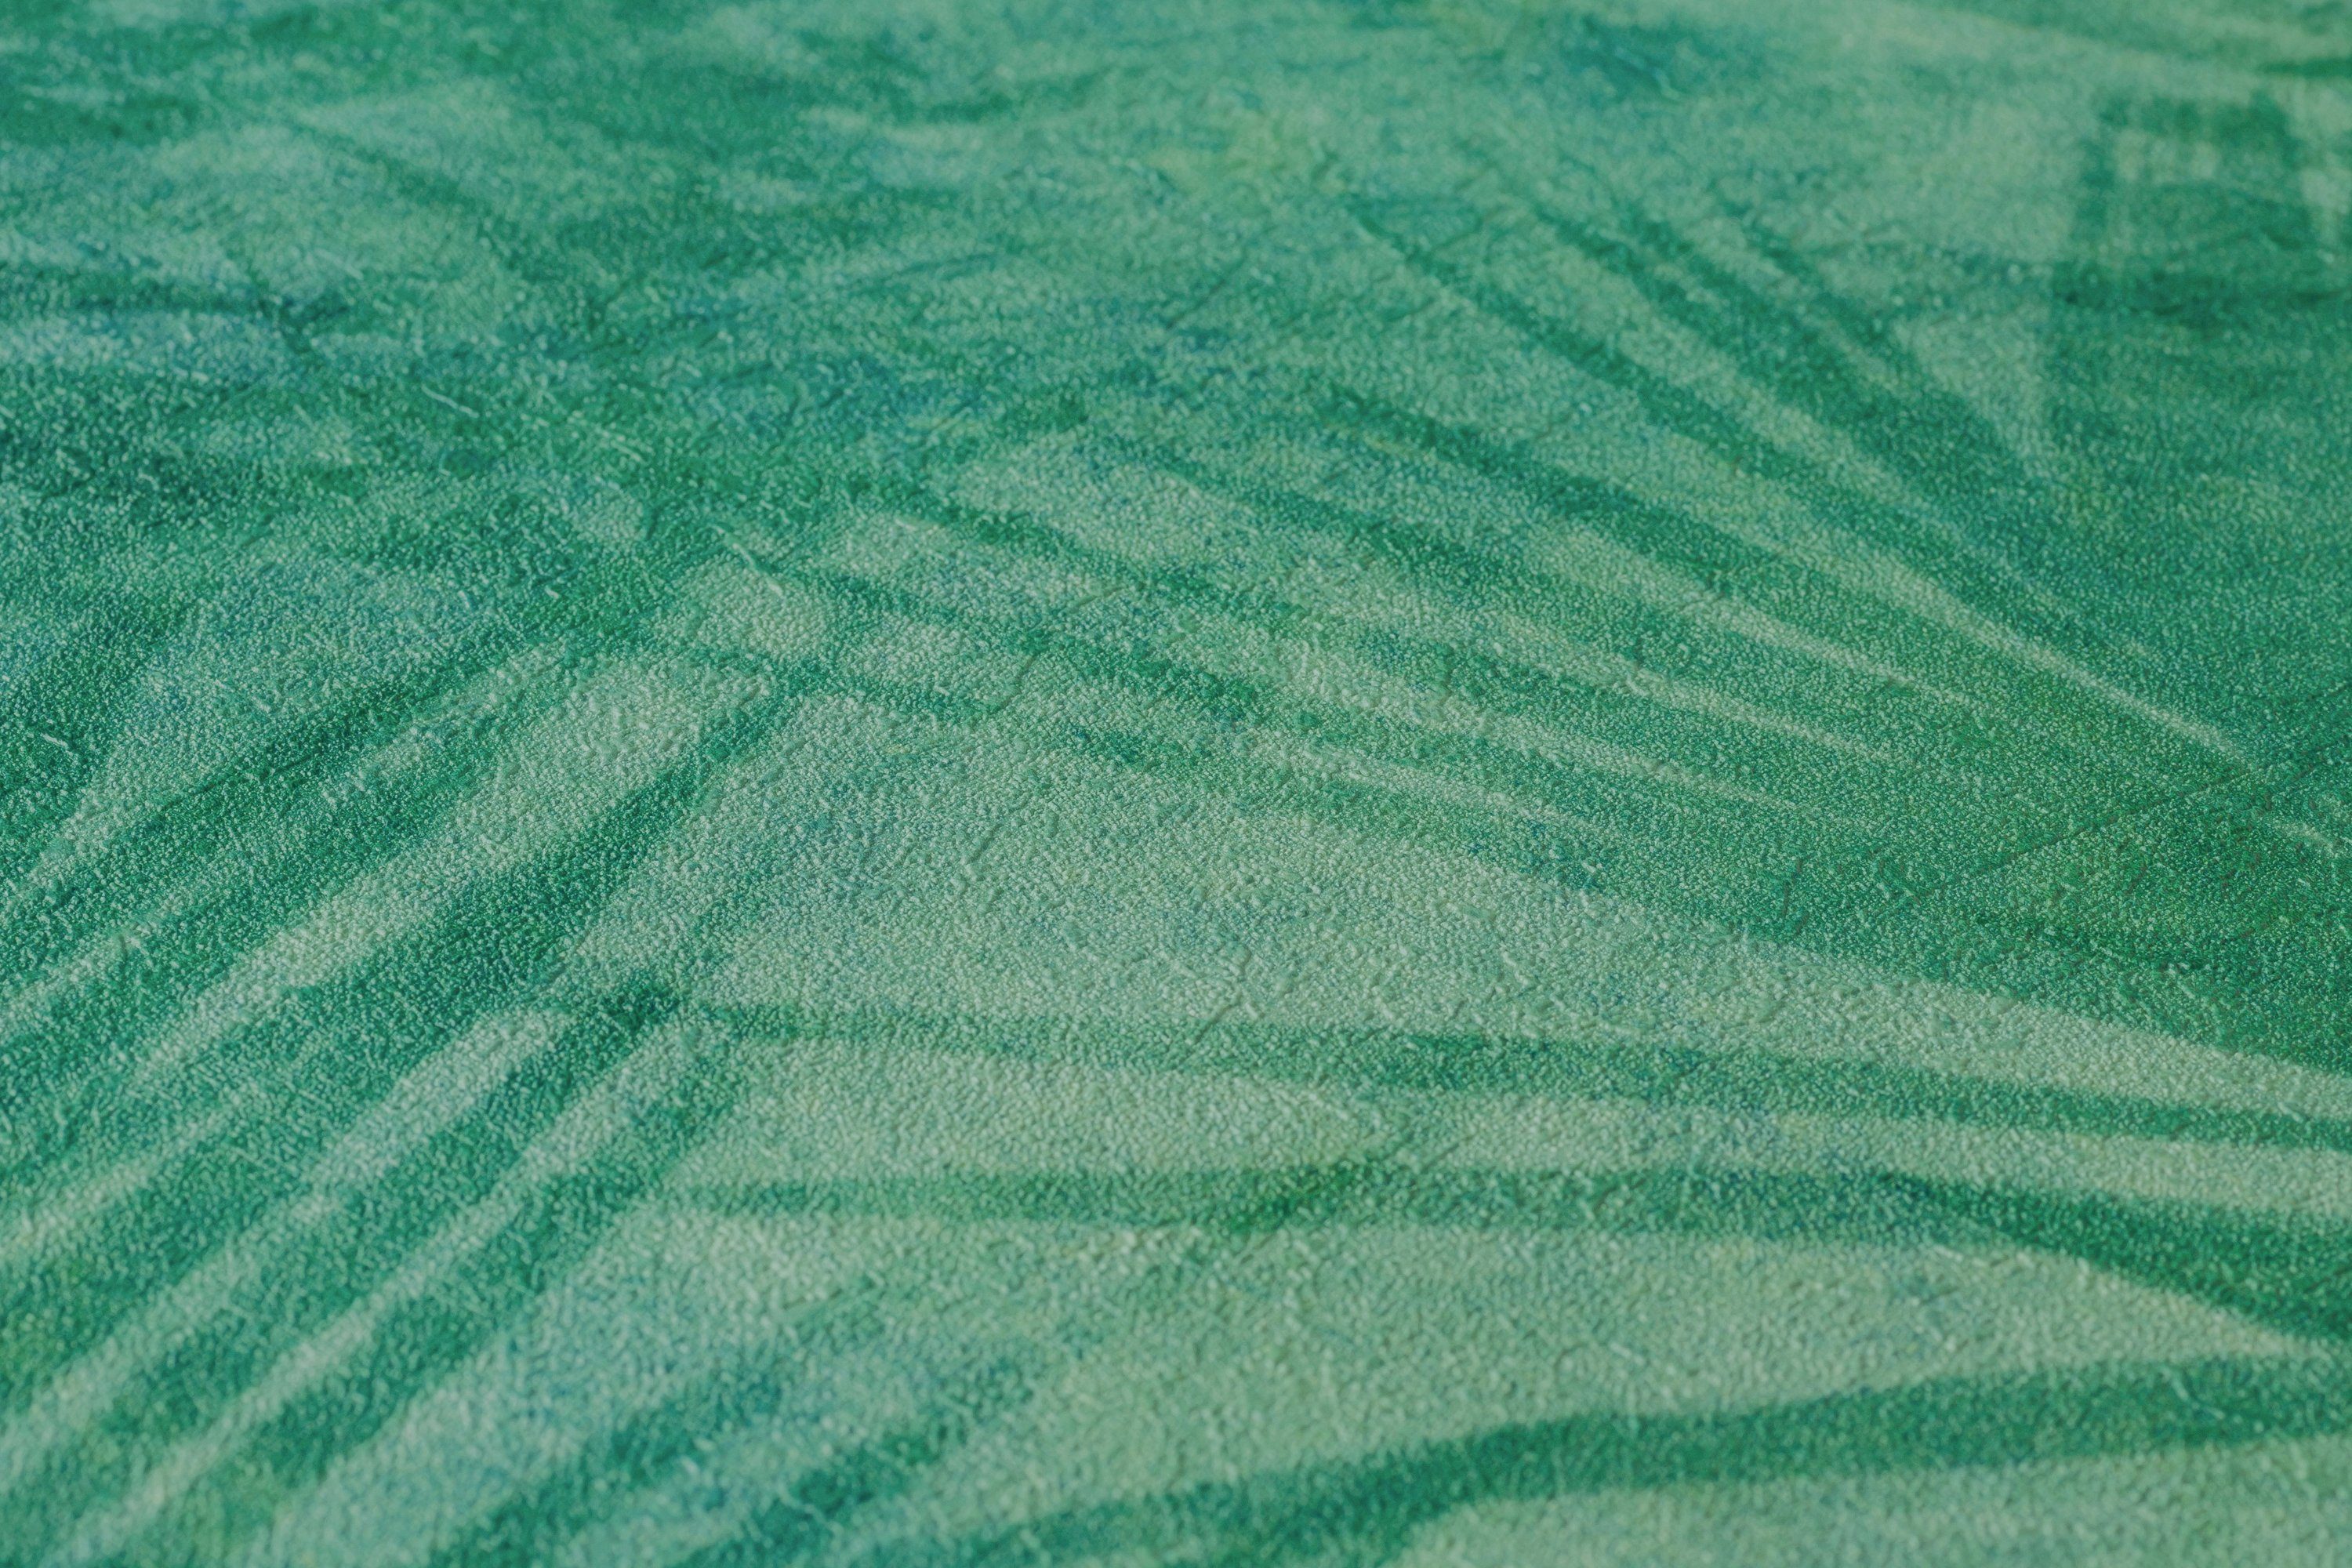 Palmenblättern, Tapete Concret Vliestapete Dschungeltapete Neue Palmen mit Bude Tropical 2.0 grün/blau floral, A.S. Création